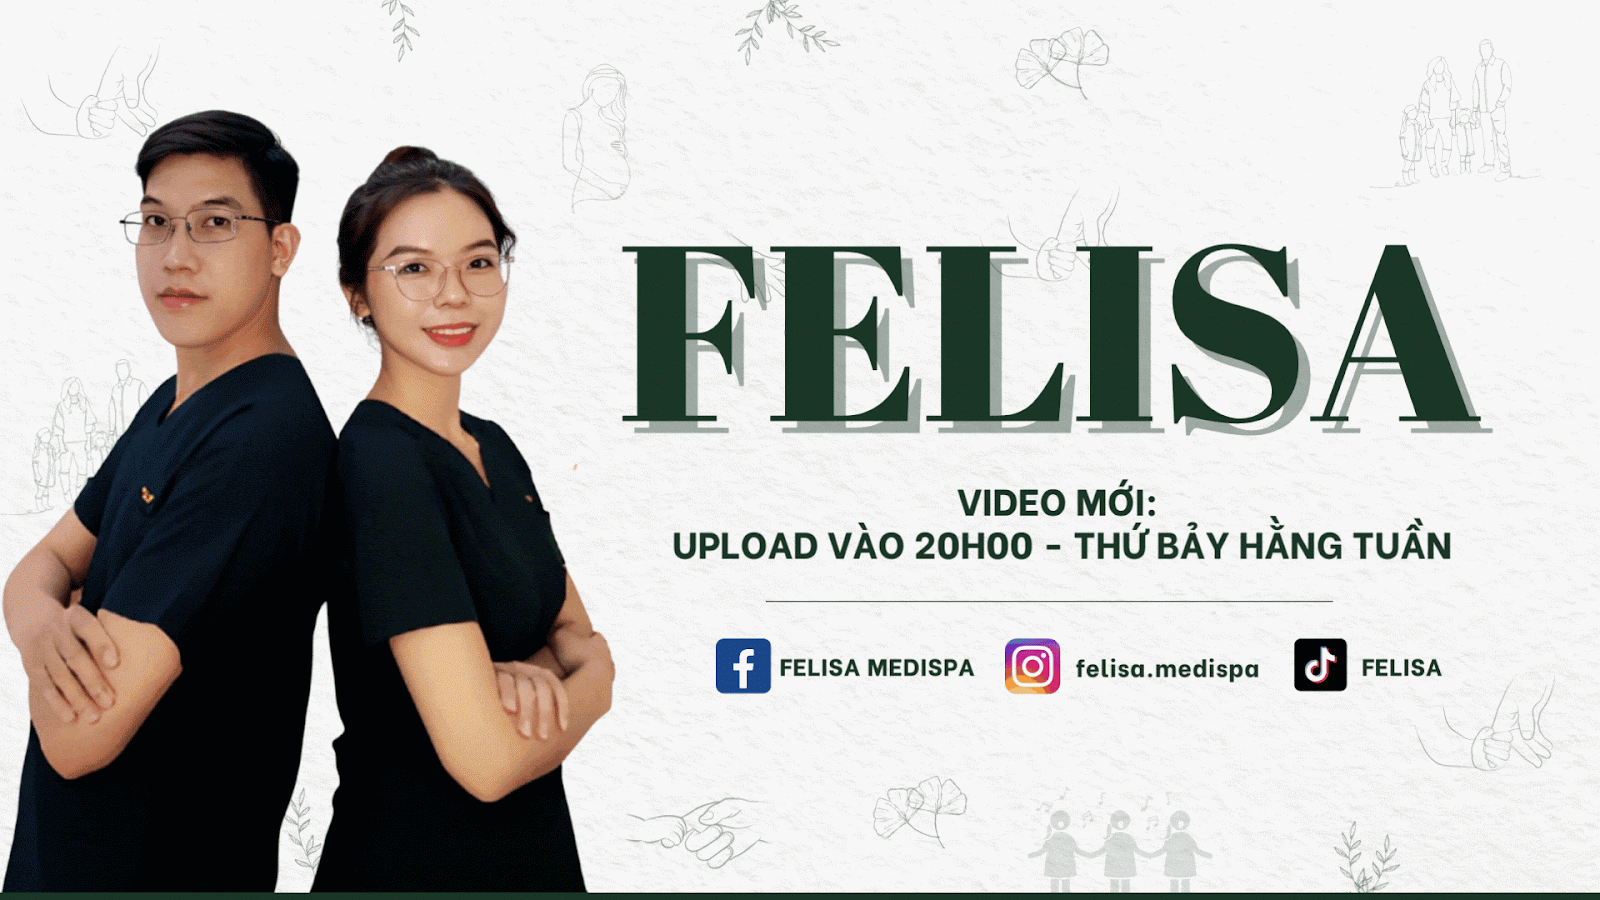 Upload video trên kênh Youtube của Felisa